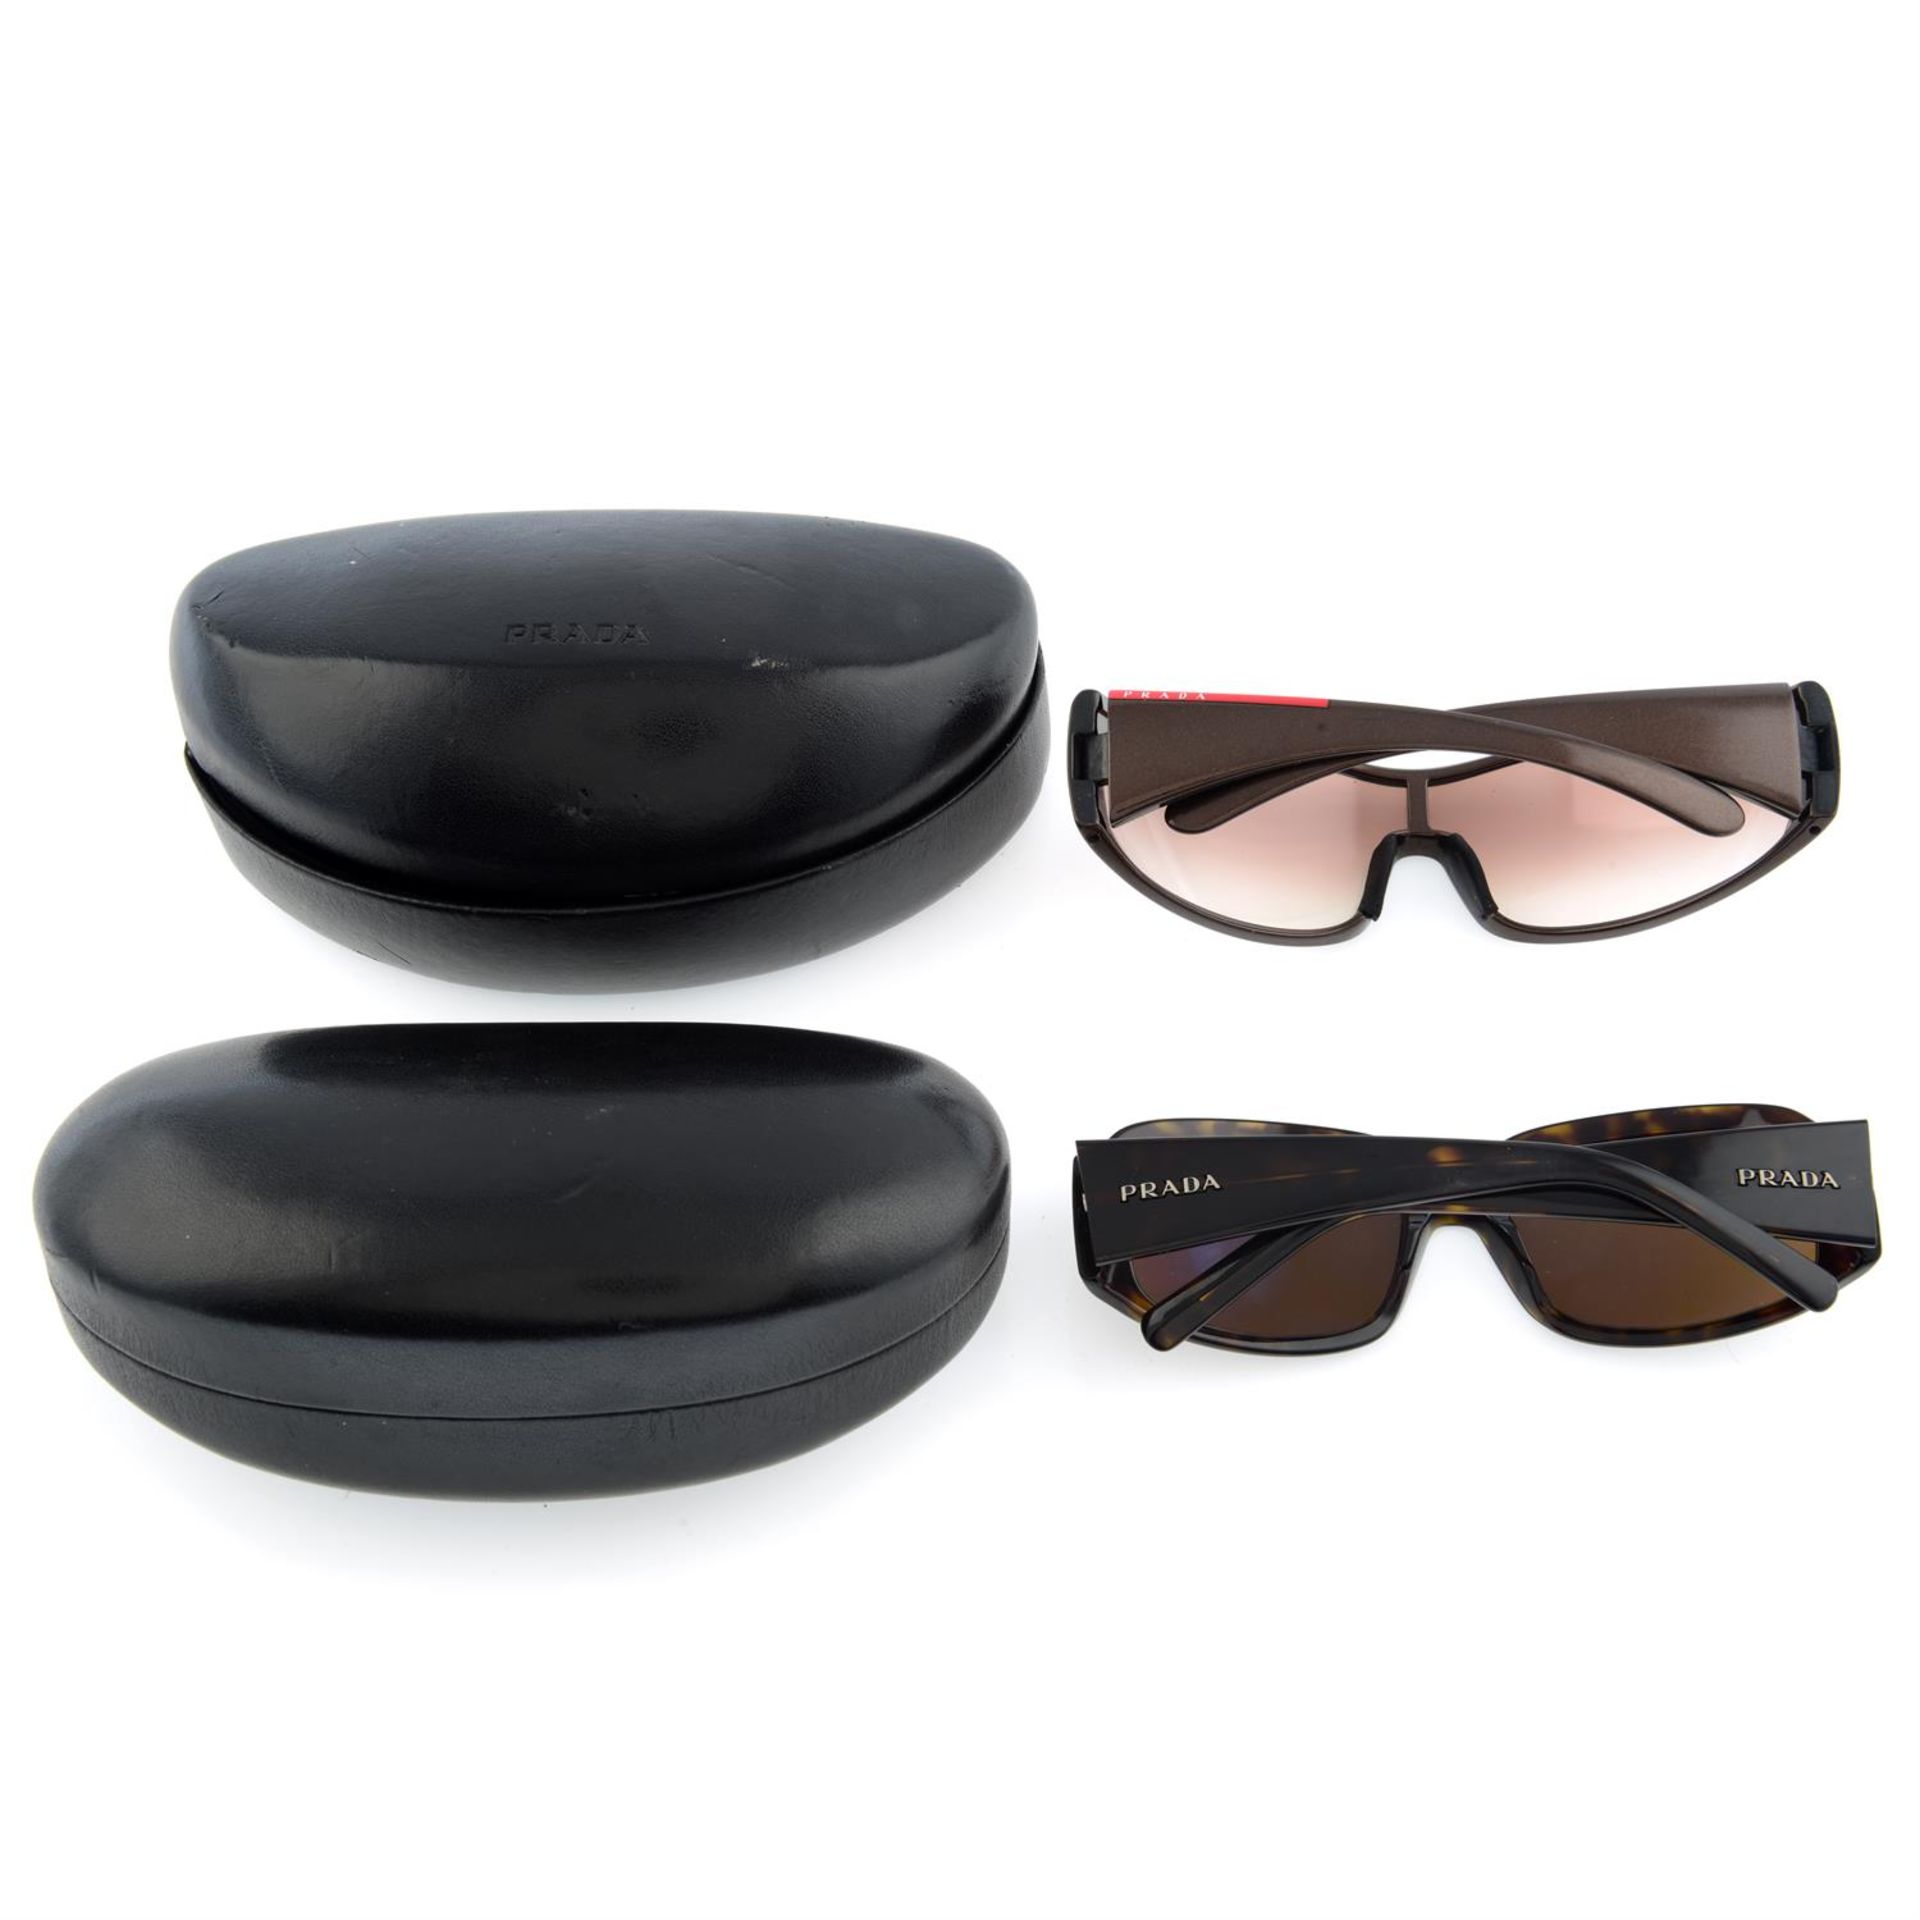 Prada - two pairs of sunglasses. - Image 2 of 2